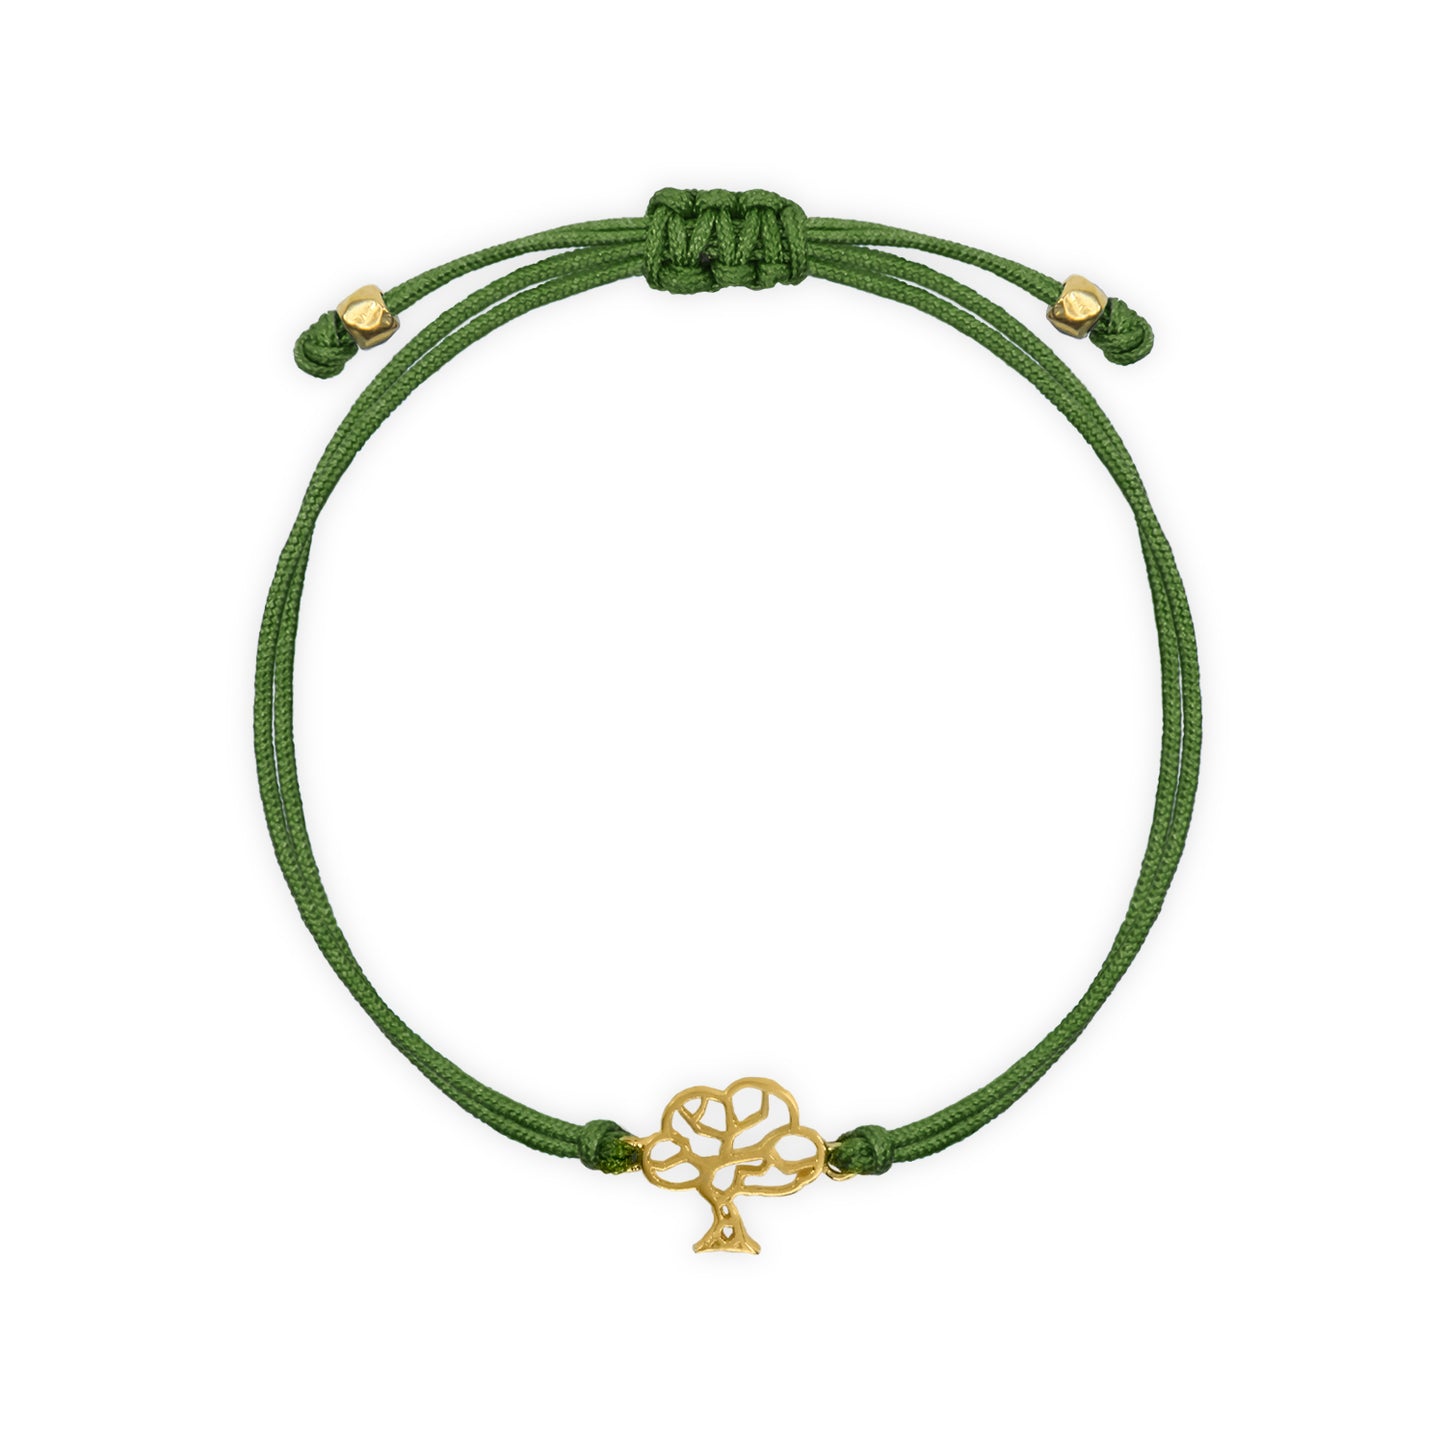 Tree Moss Green Cording Adjustable Bracelet